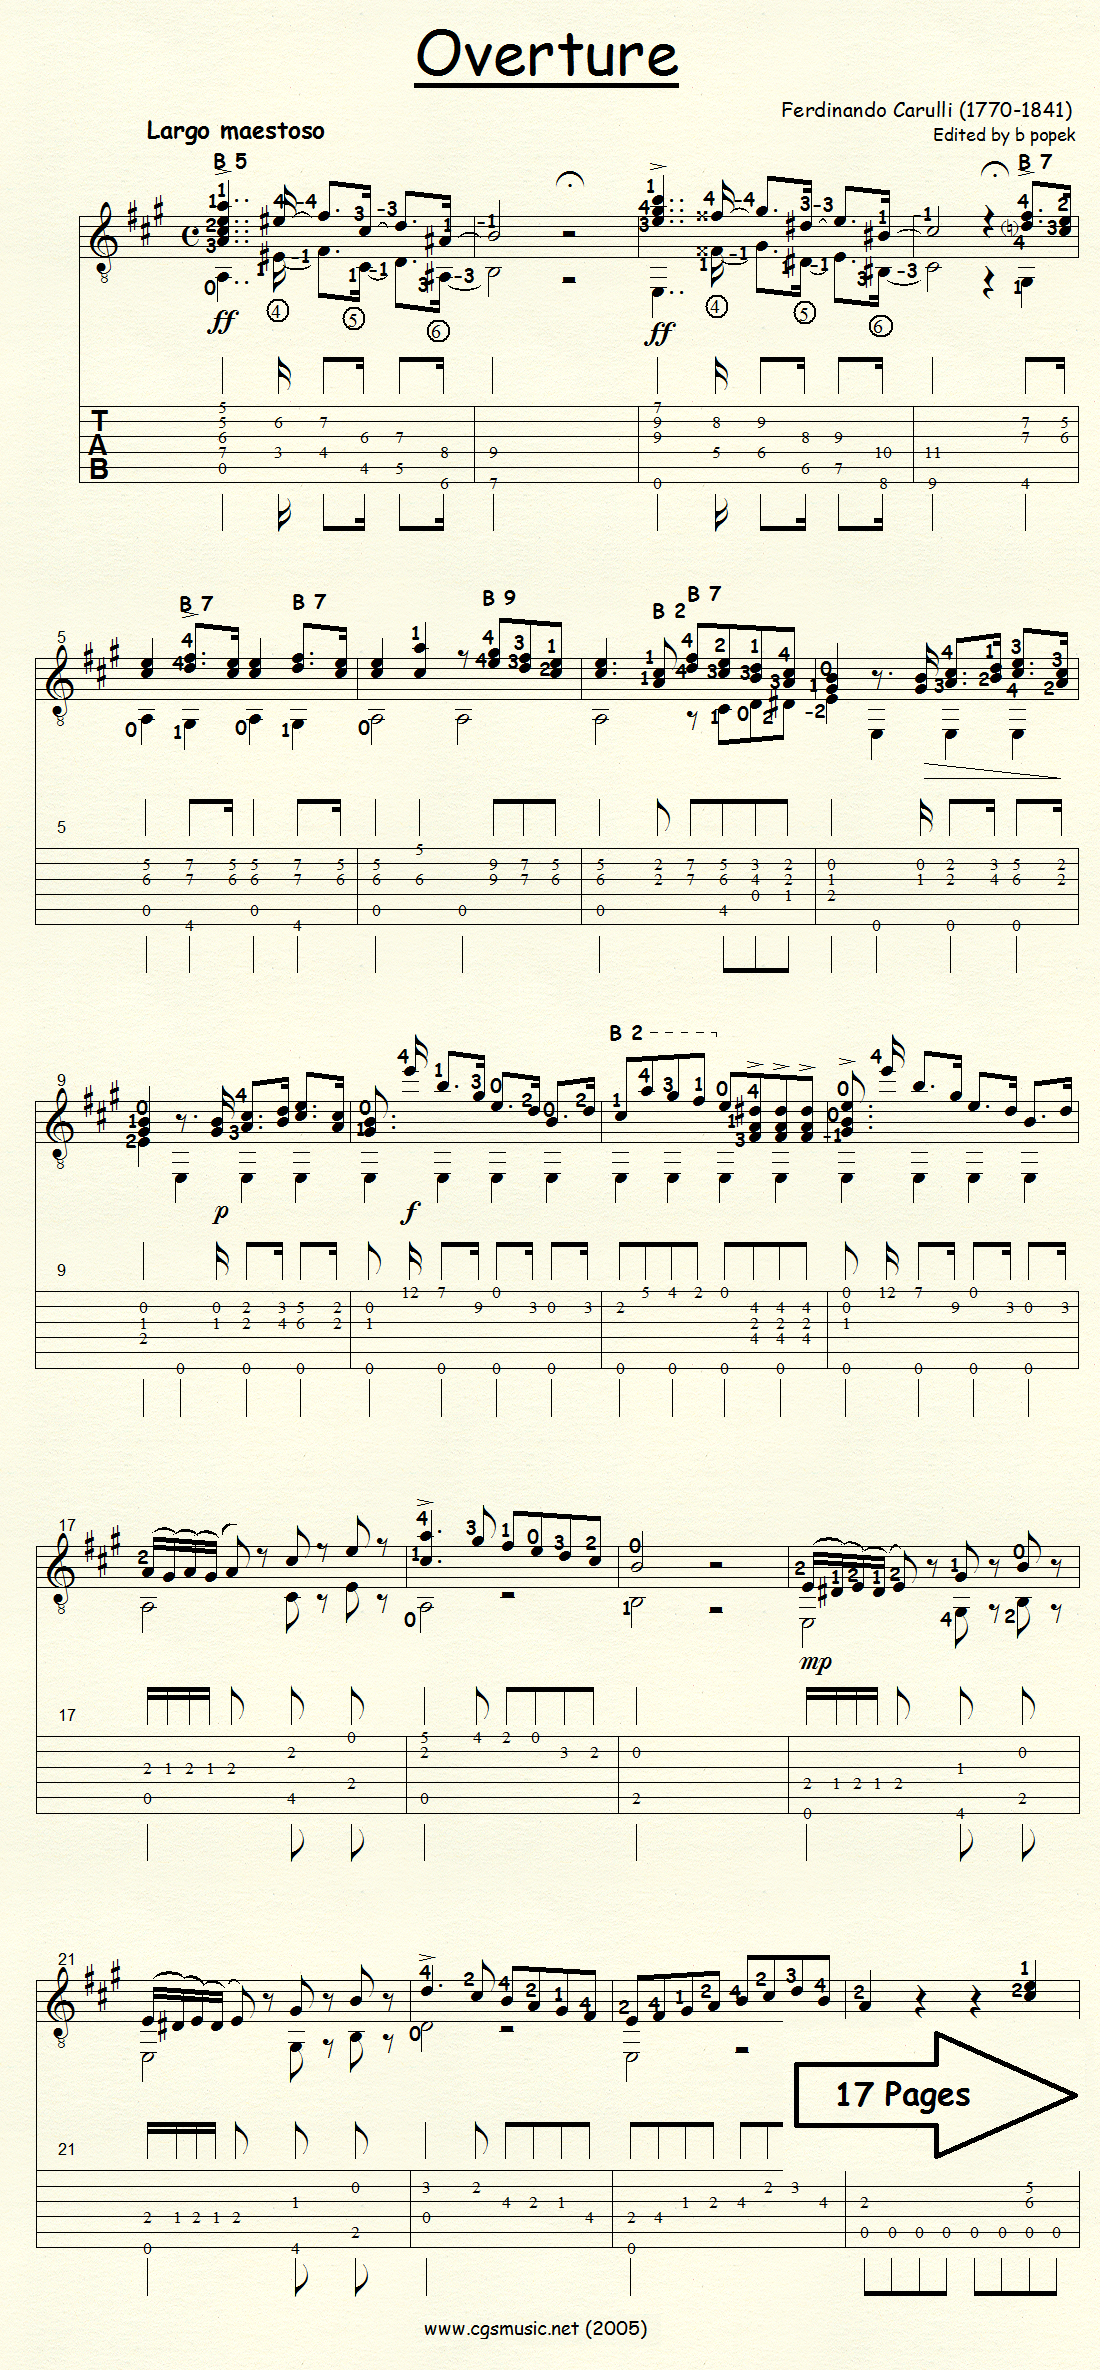 Overture (Carulli) for Classical Guitar in Tablature